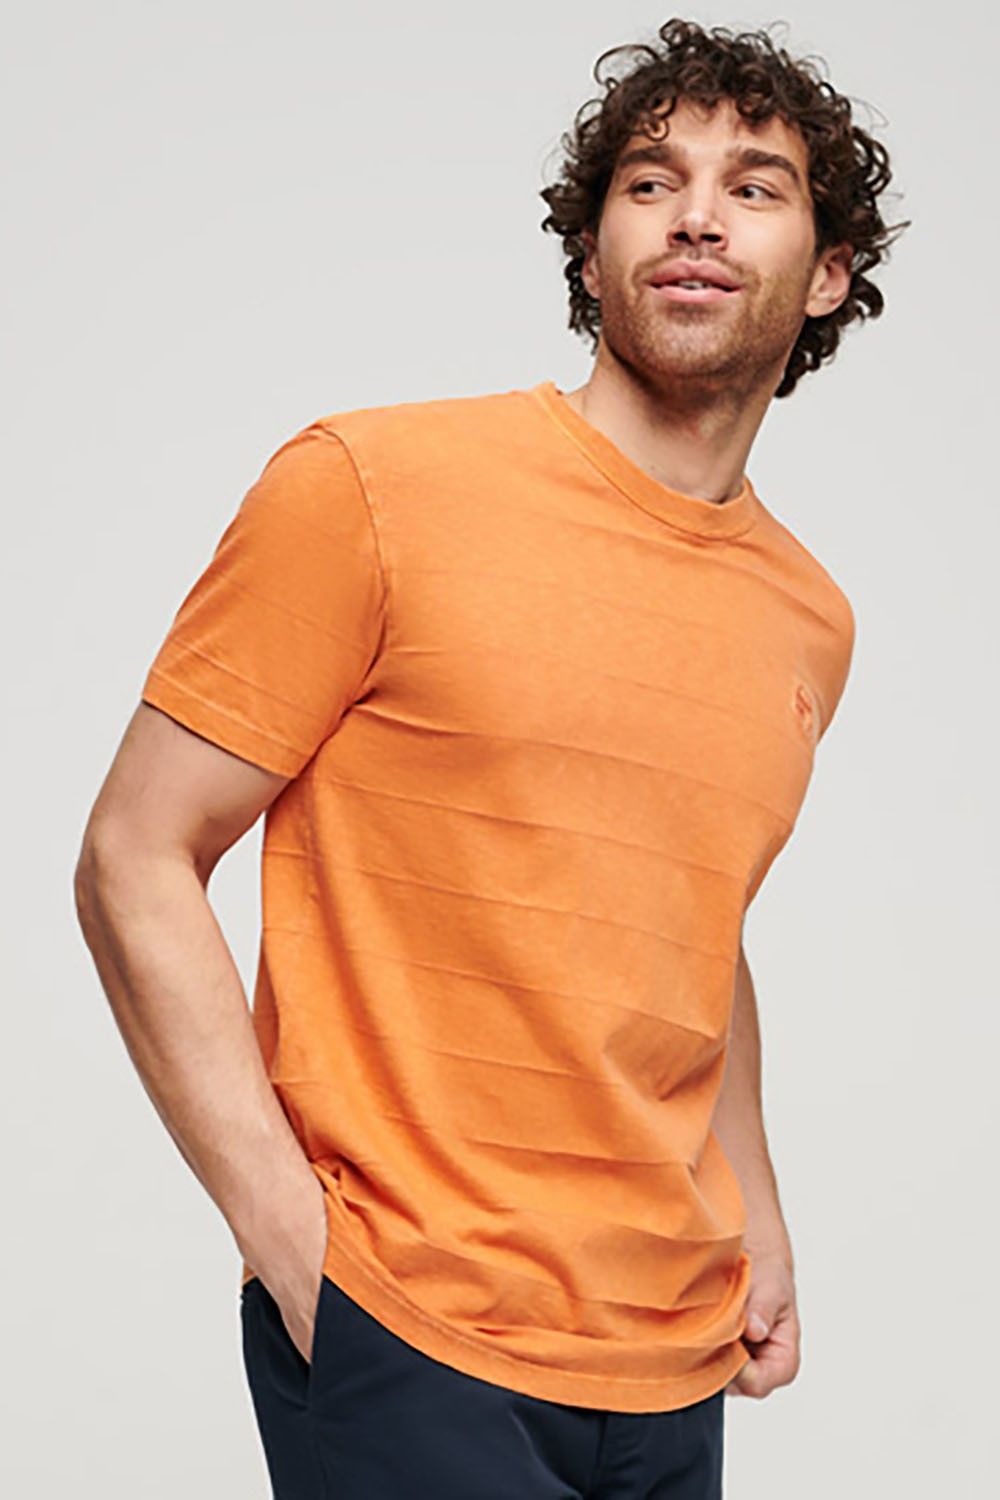 Superdry T-shirt oranje